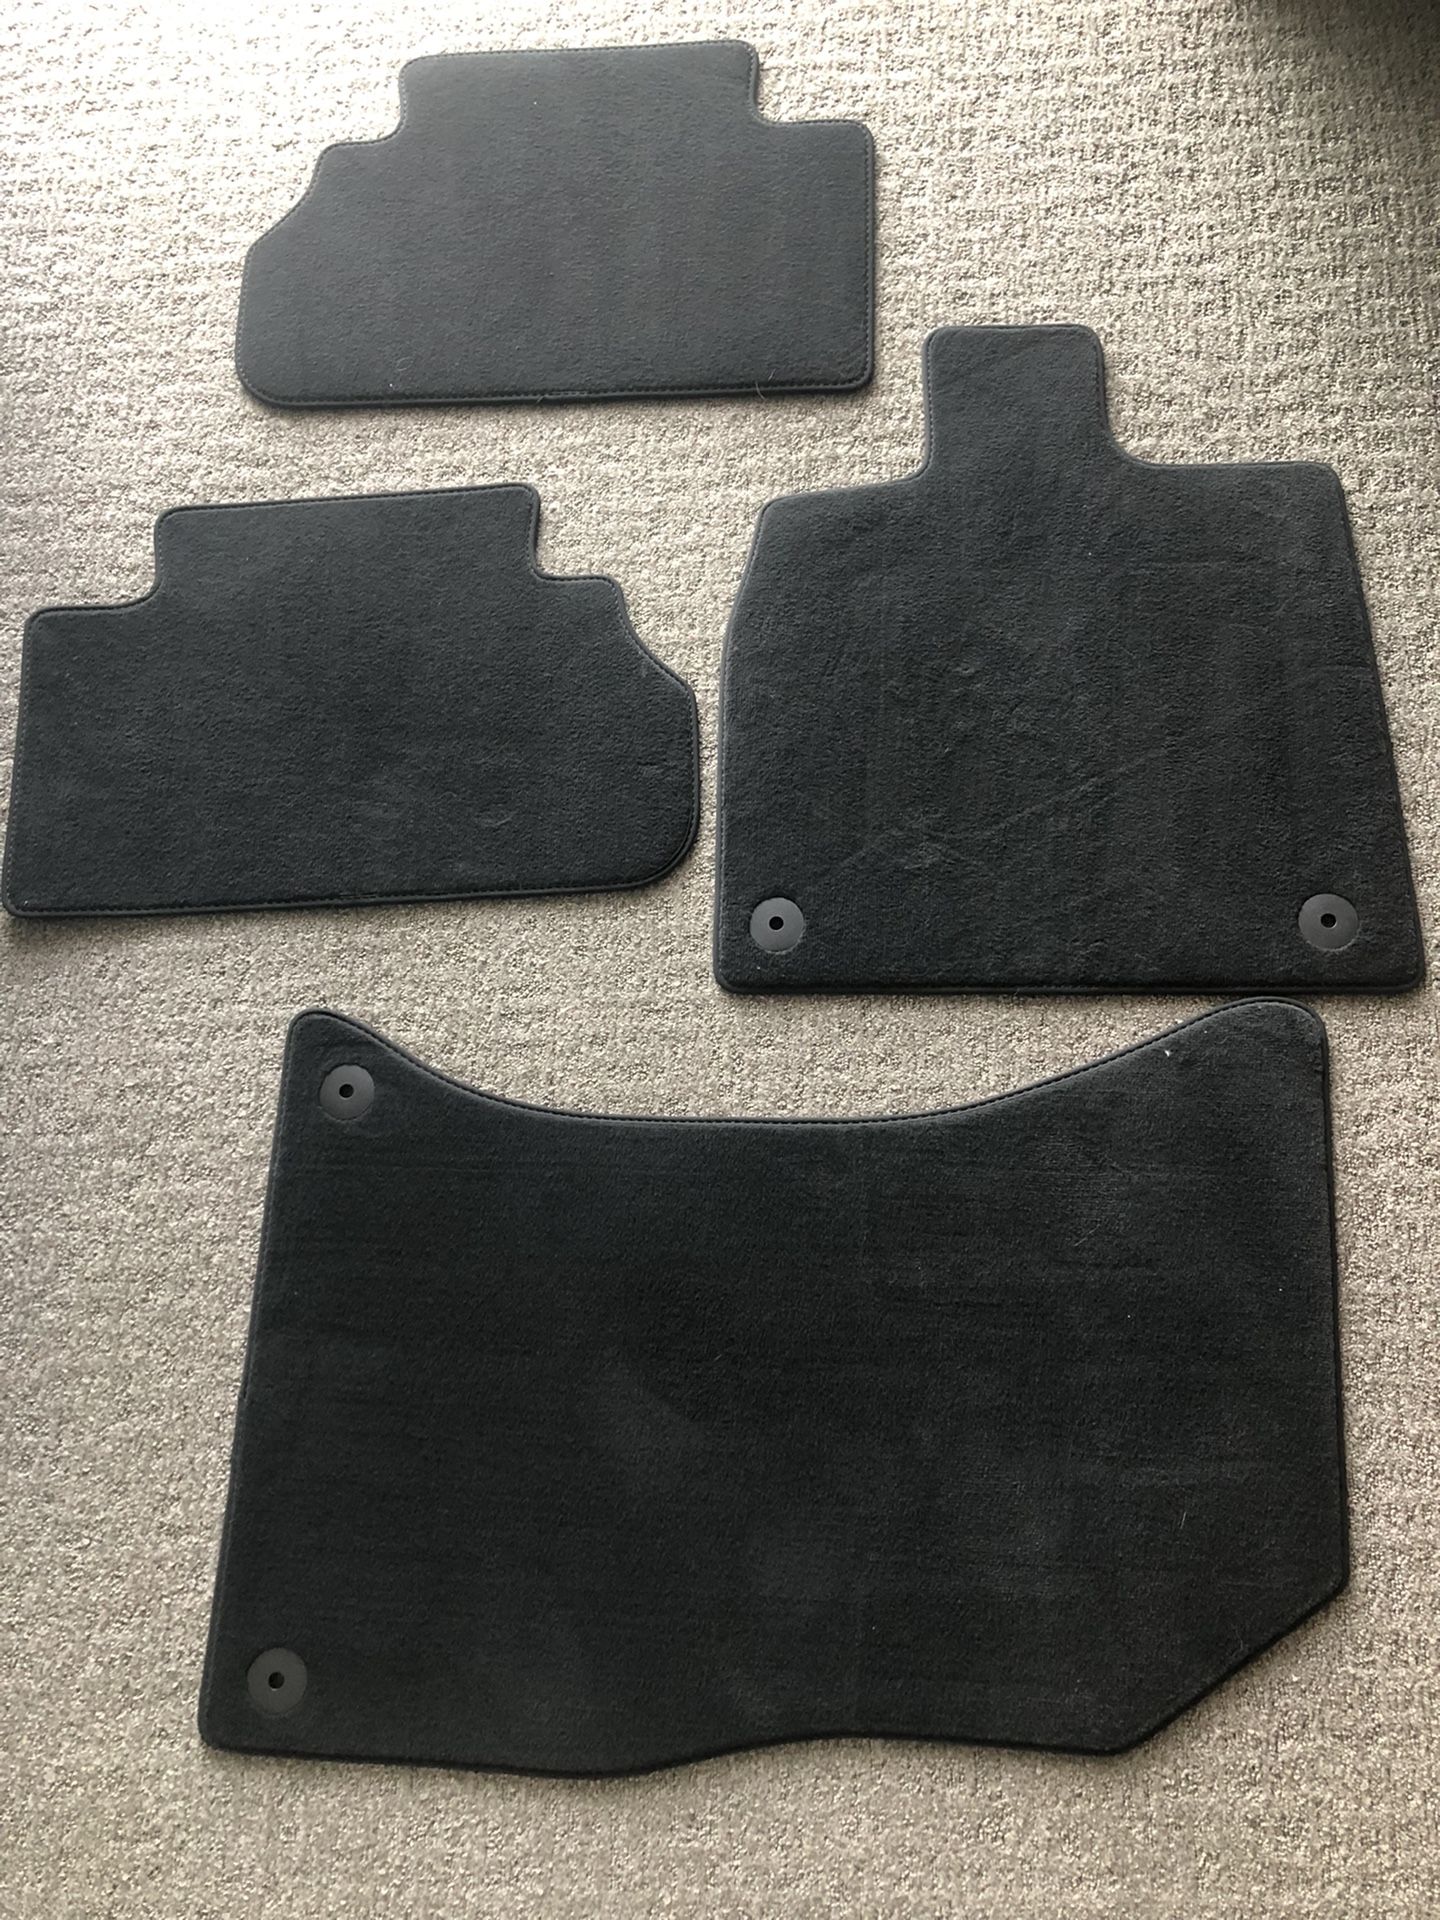 New 4 mats for Audi car